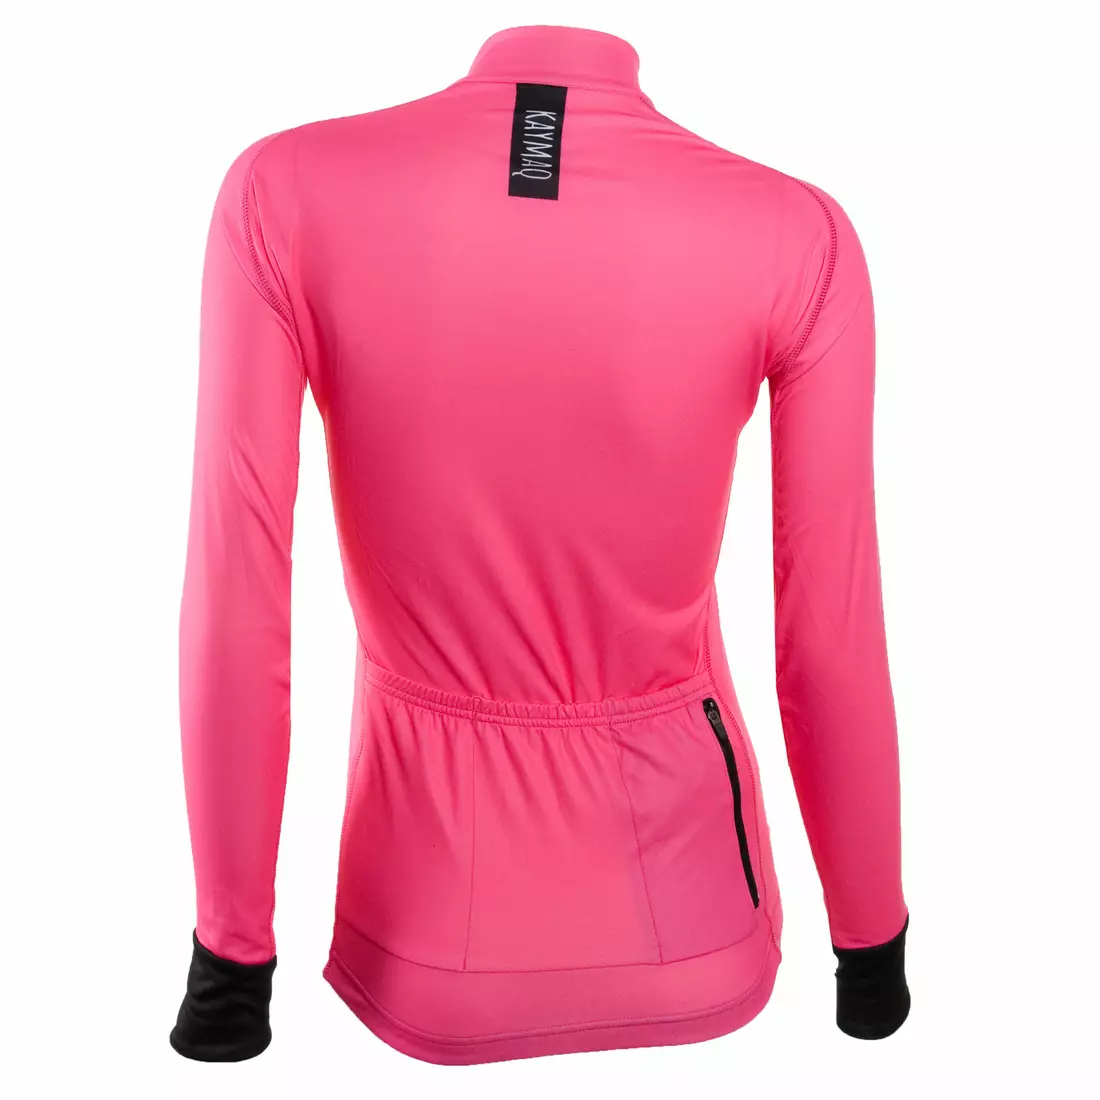 KAYMAQ BDK002 women's cycling jersey pink